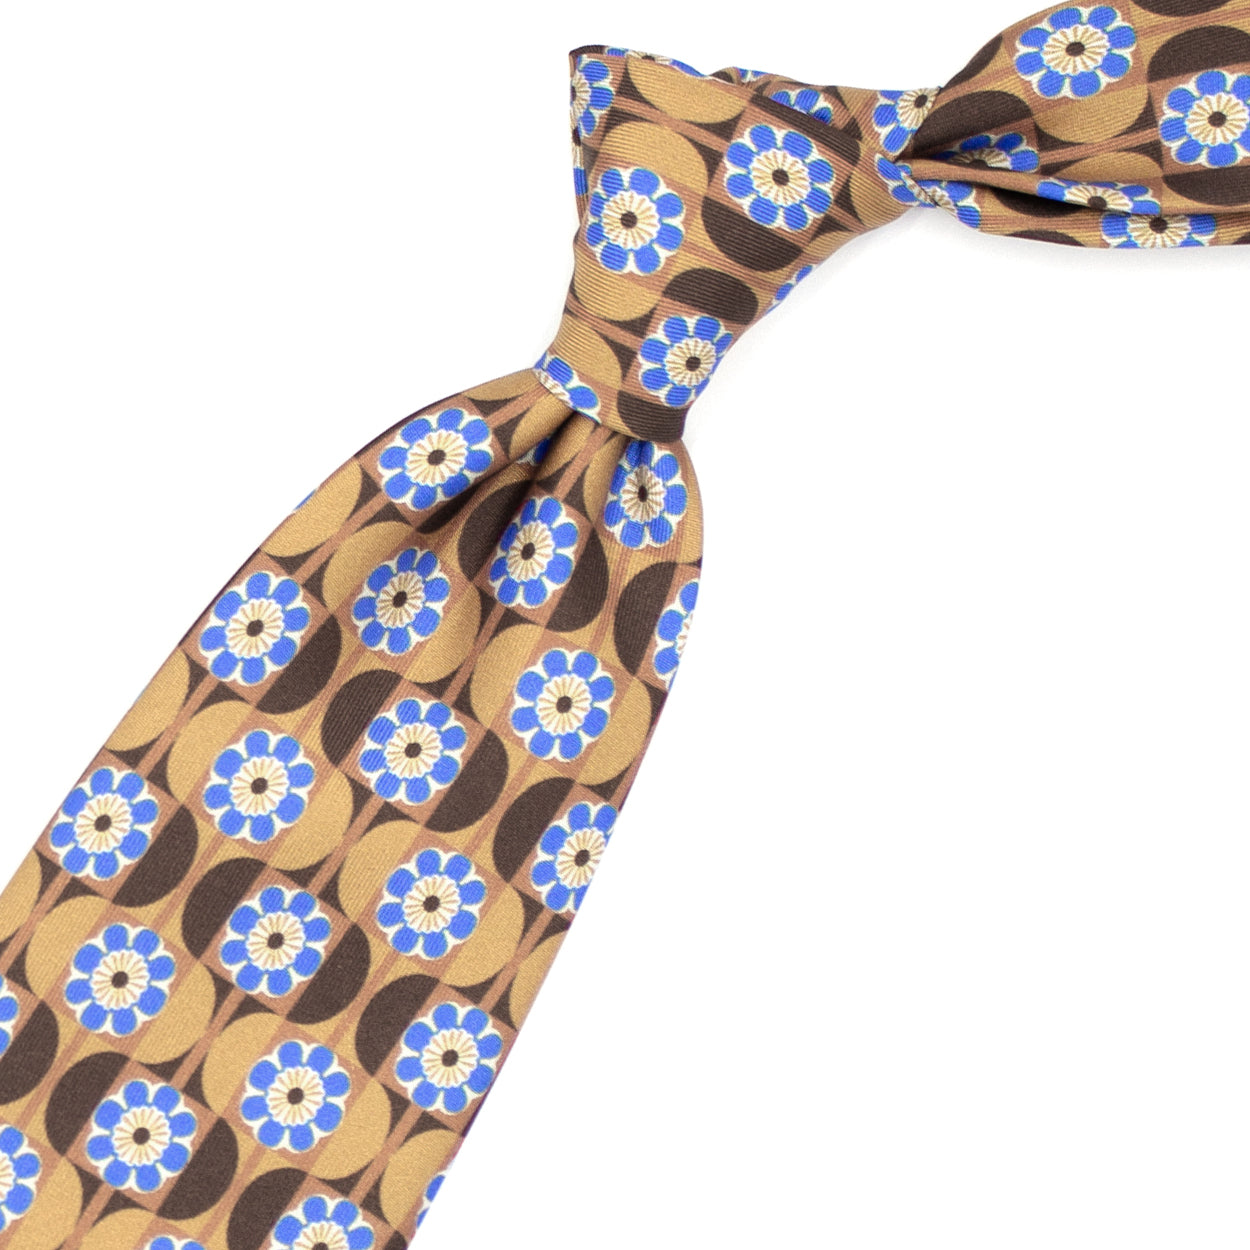 Beige tie with blue flowers